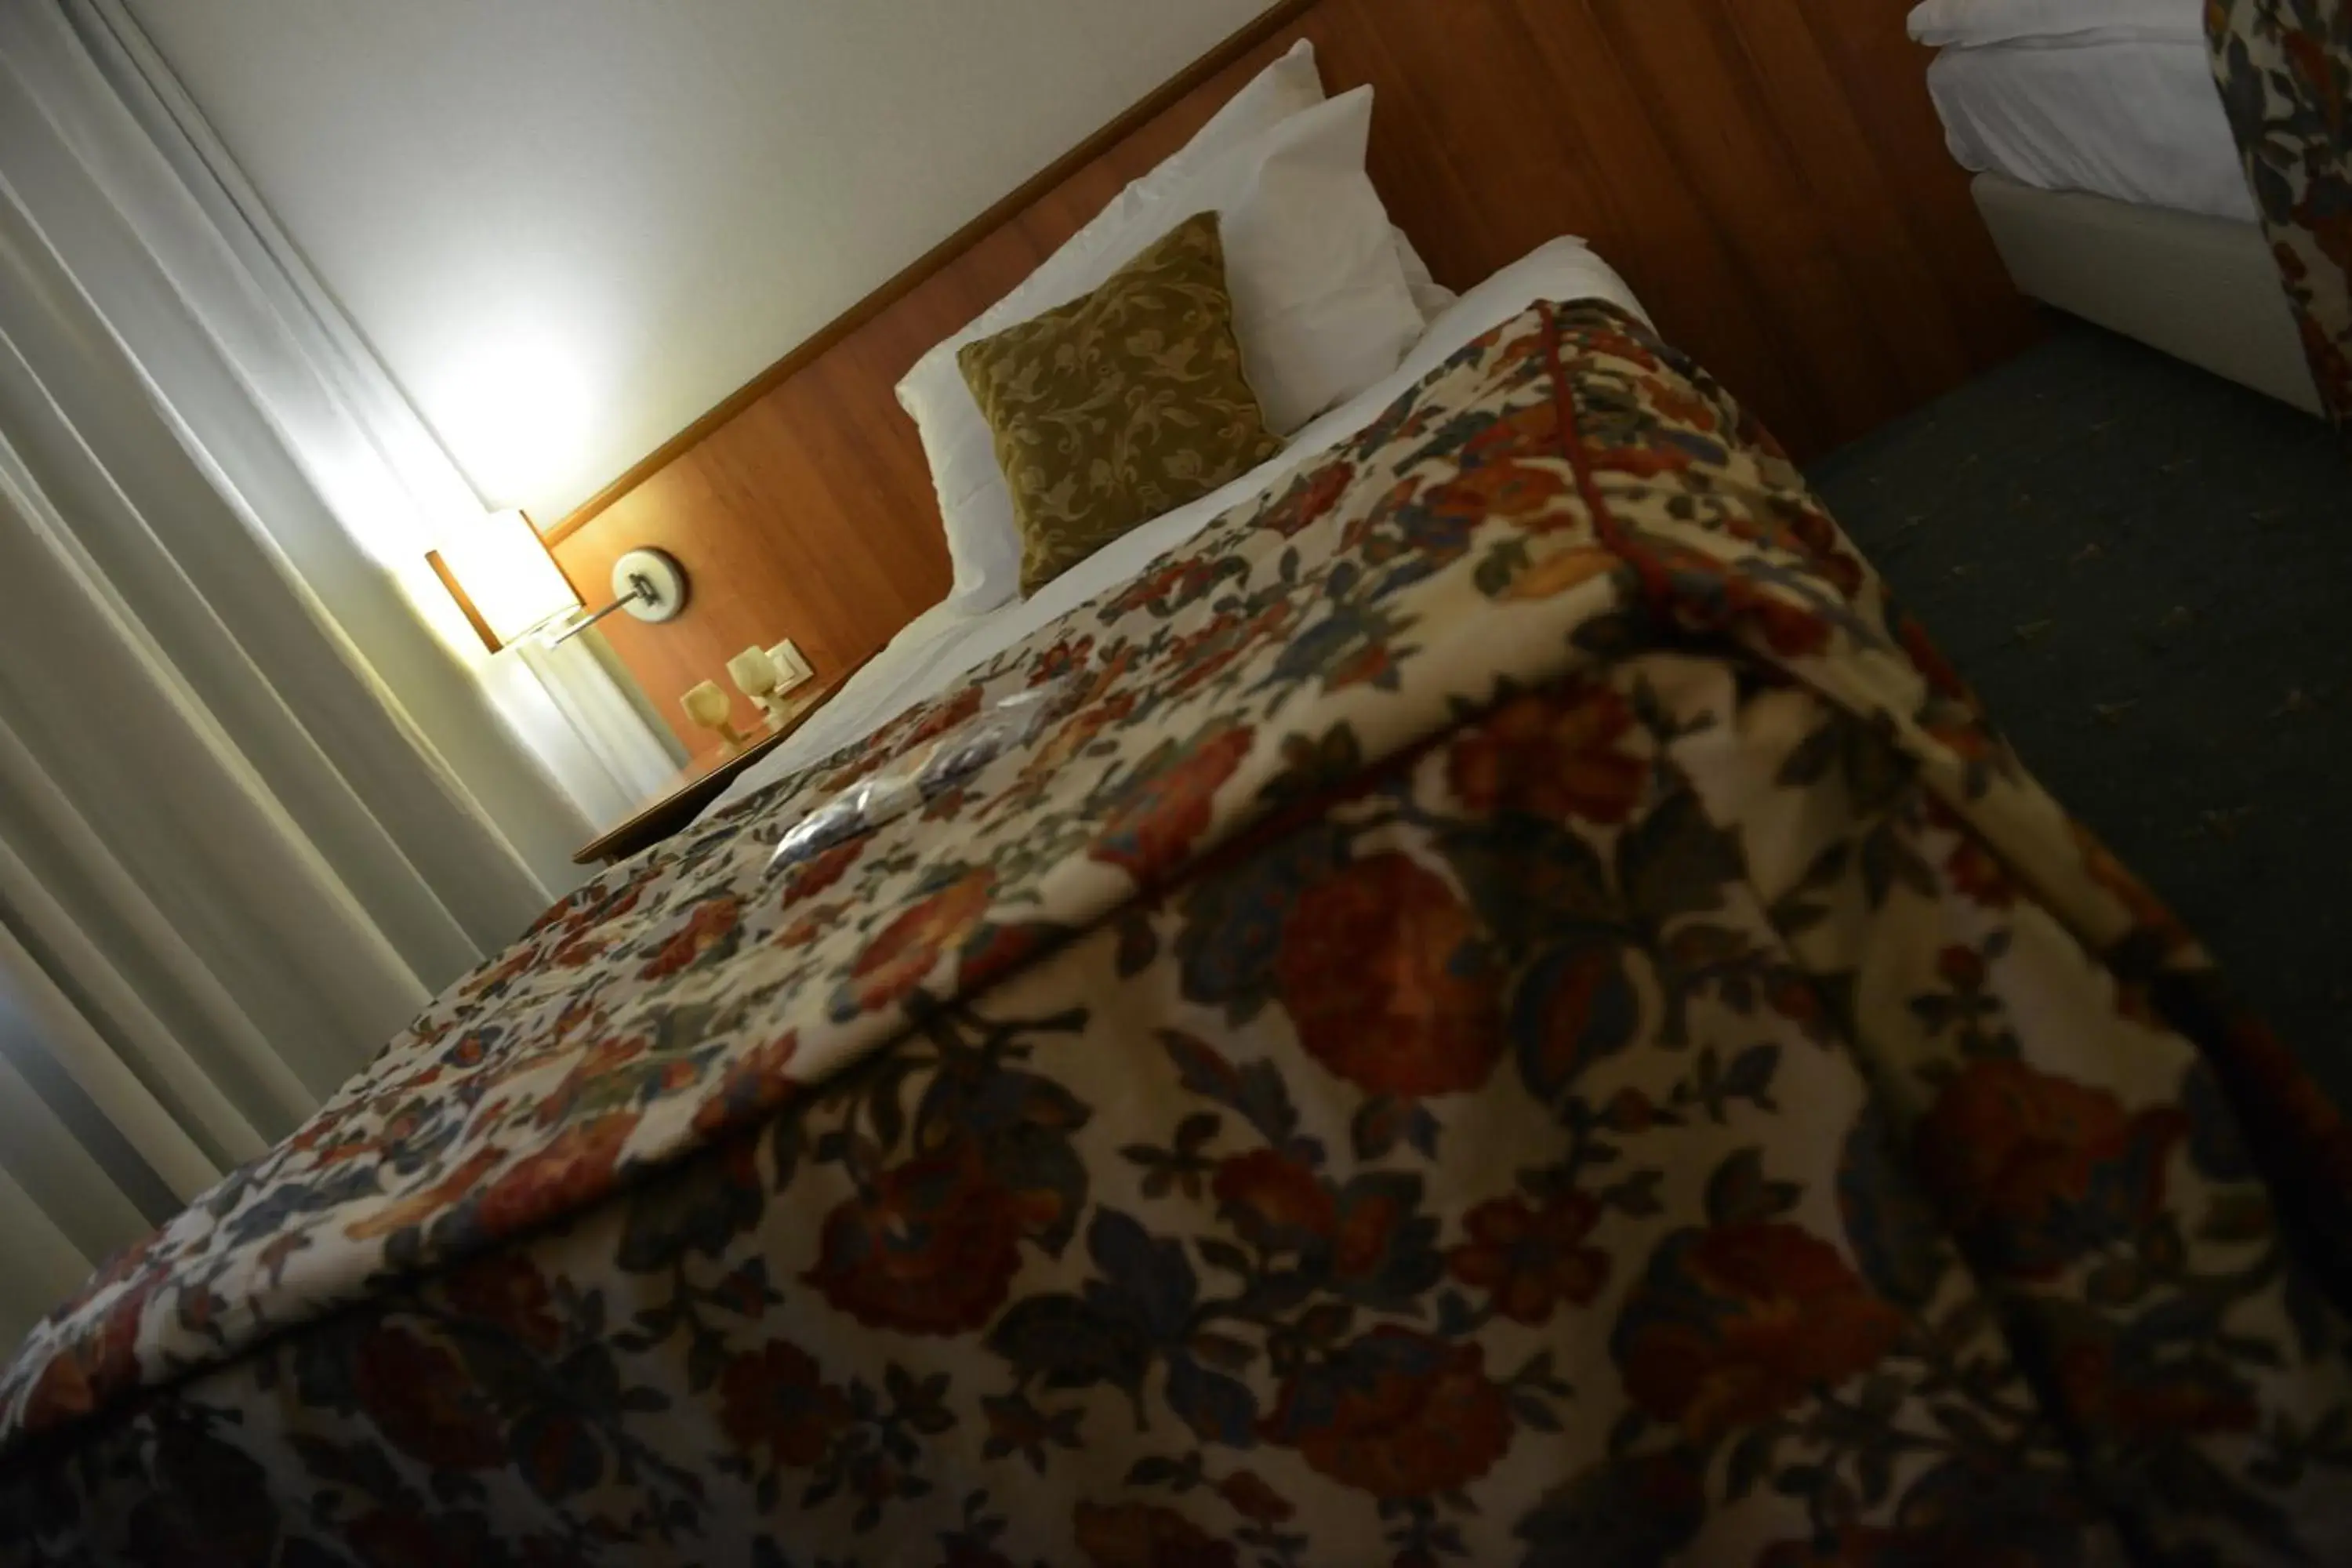 Bed in Hotel Karpos